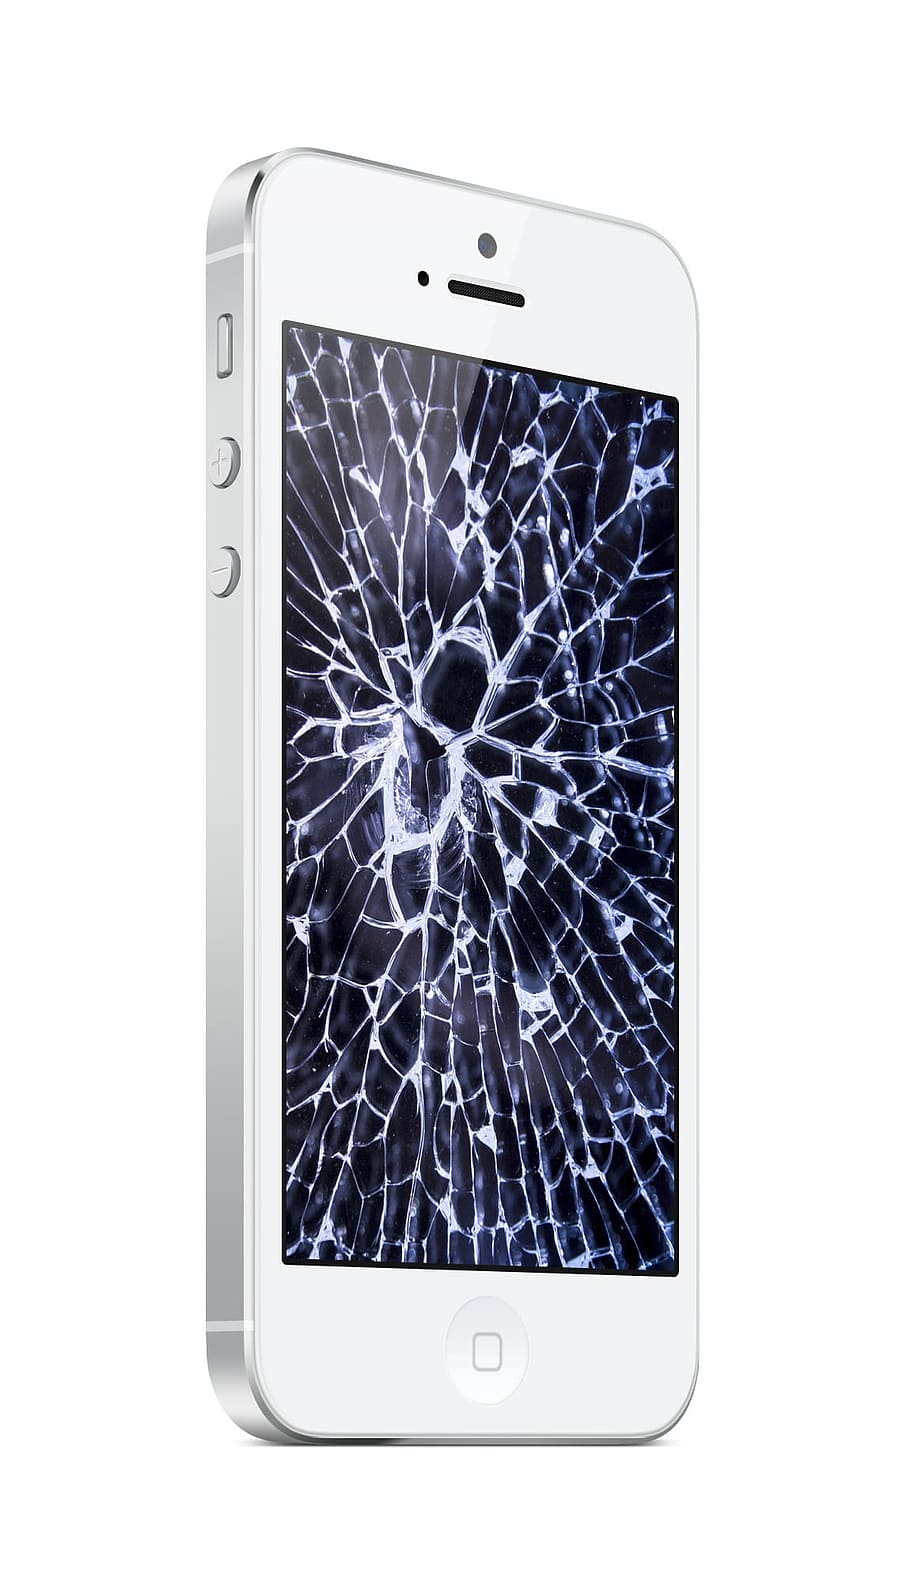 broken white iPhone 5, broken screen, mobile, technology, wireless technology